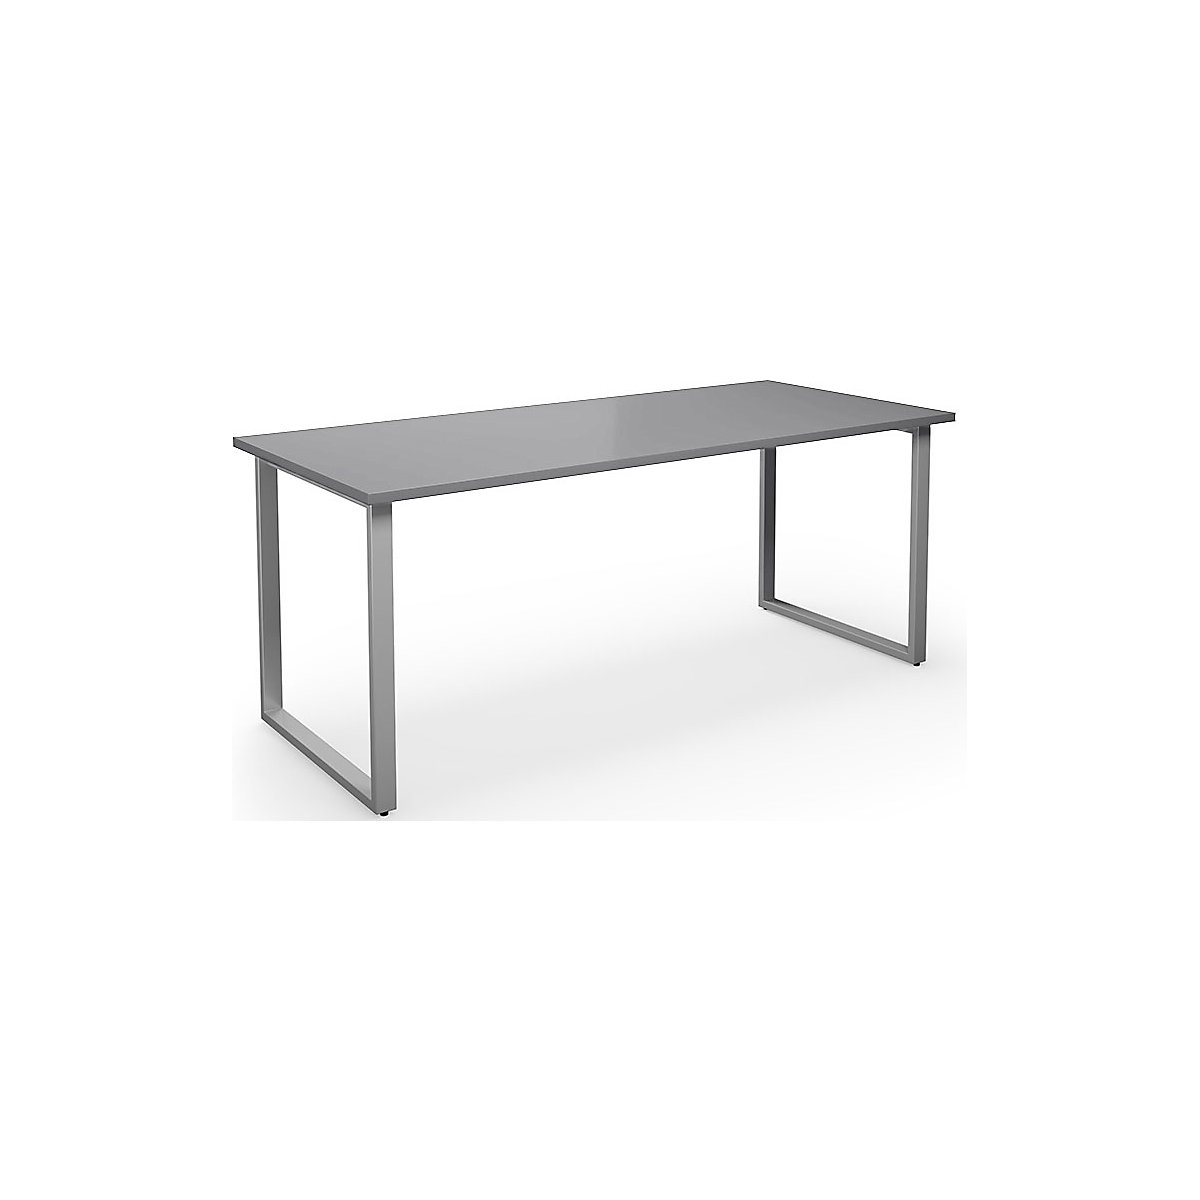 DUO-O multi-purpose desk, straight tabletop, WxD 1800 x 800 mm, light grey, silver-7